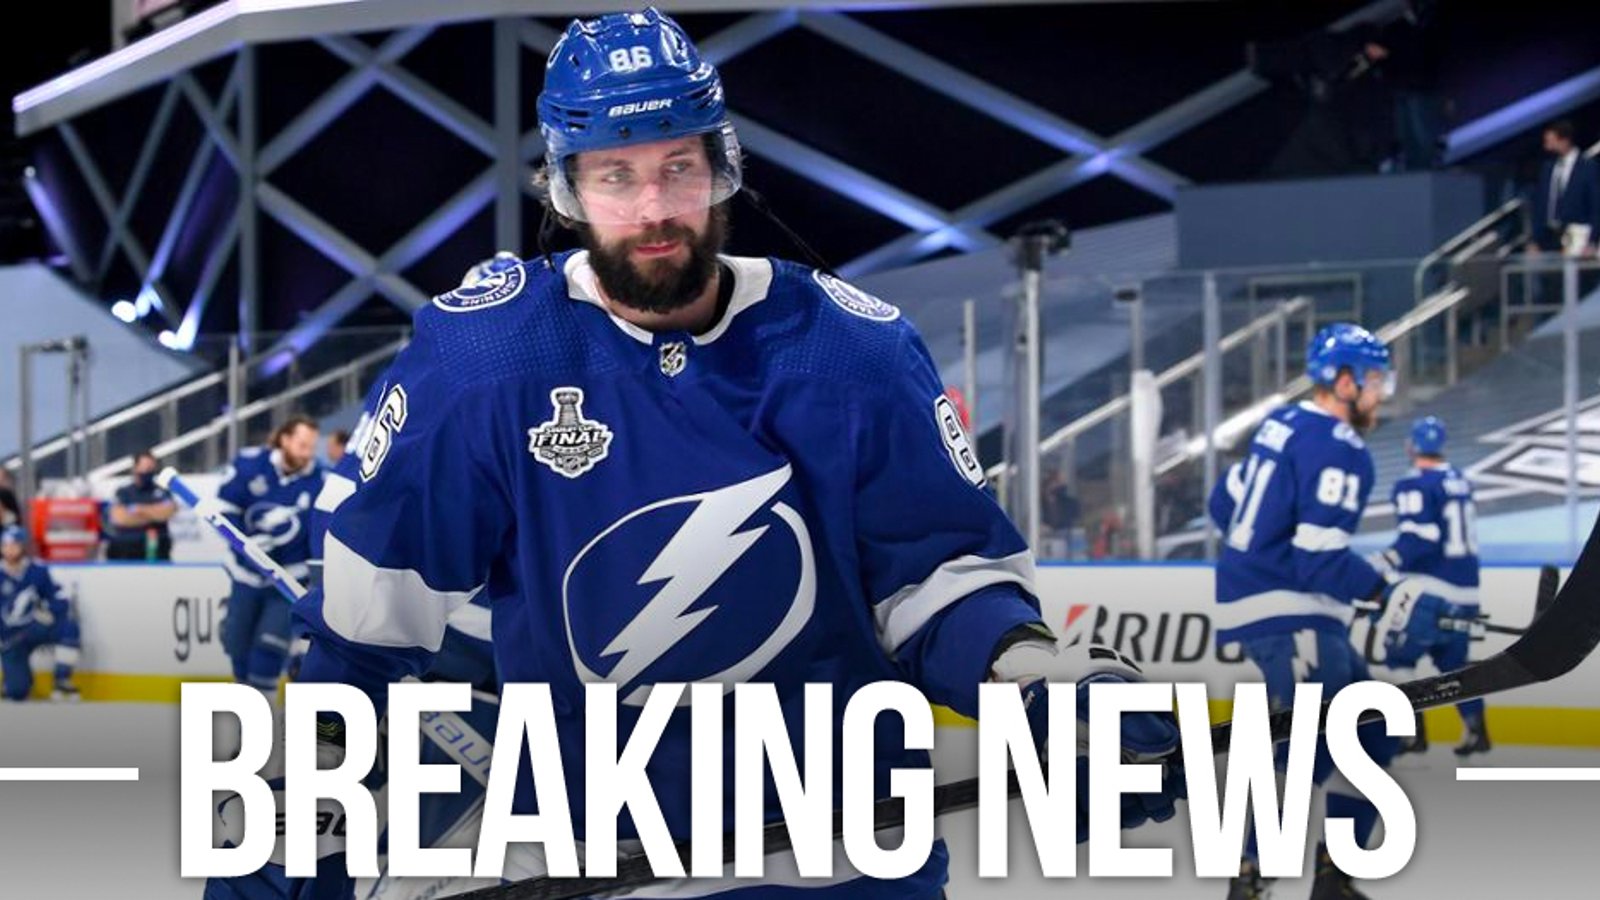 Lightning accused of circumventing NHL salary cap after latest report on Kucherov